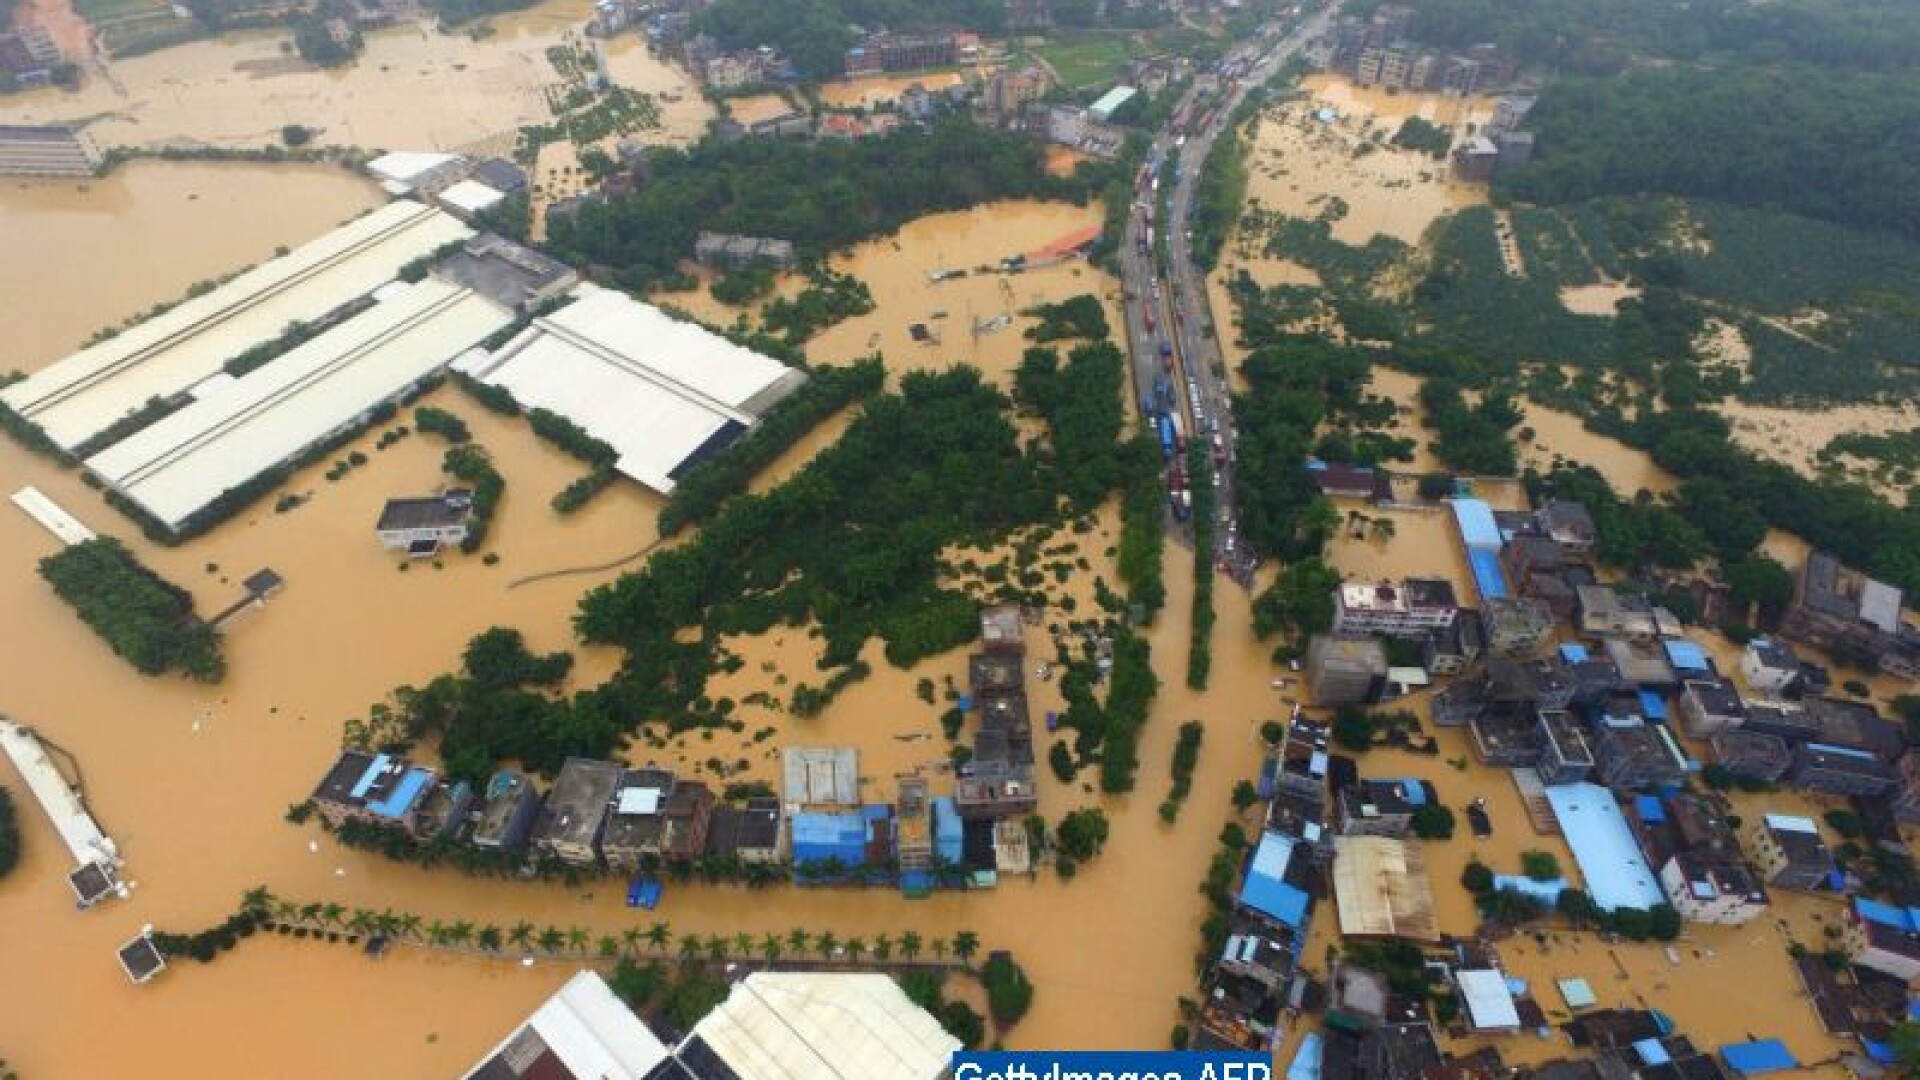 Inundatii catastrofale in sudul Chinei: 15 morti